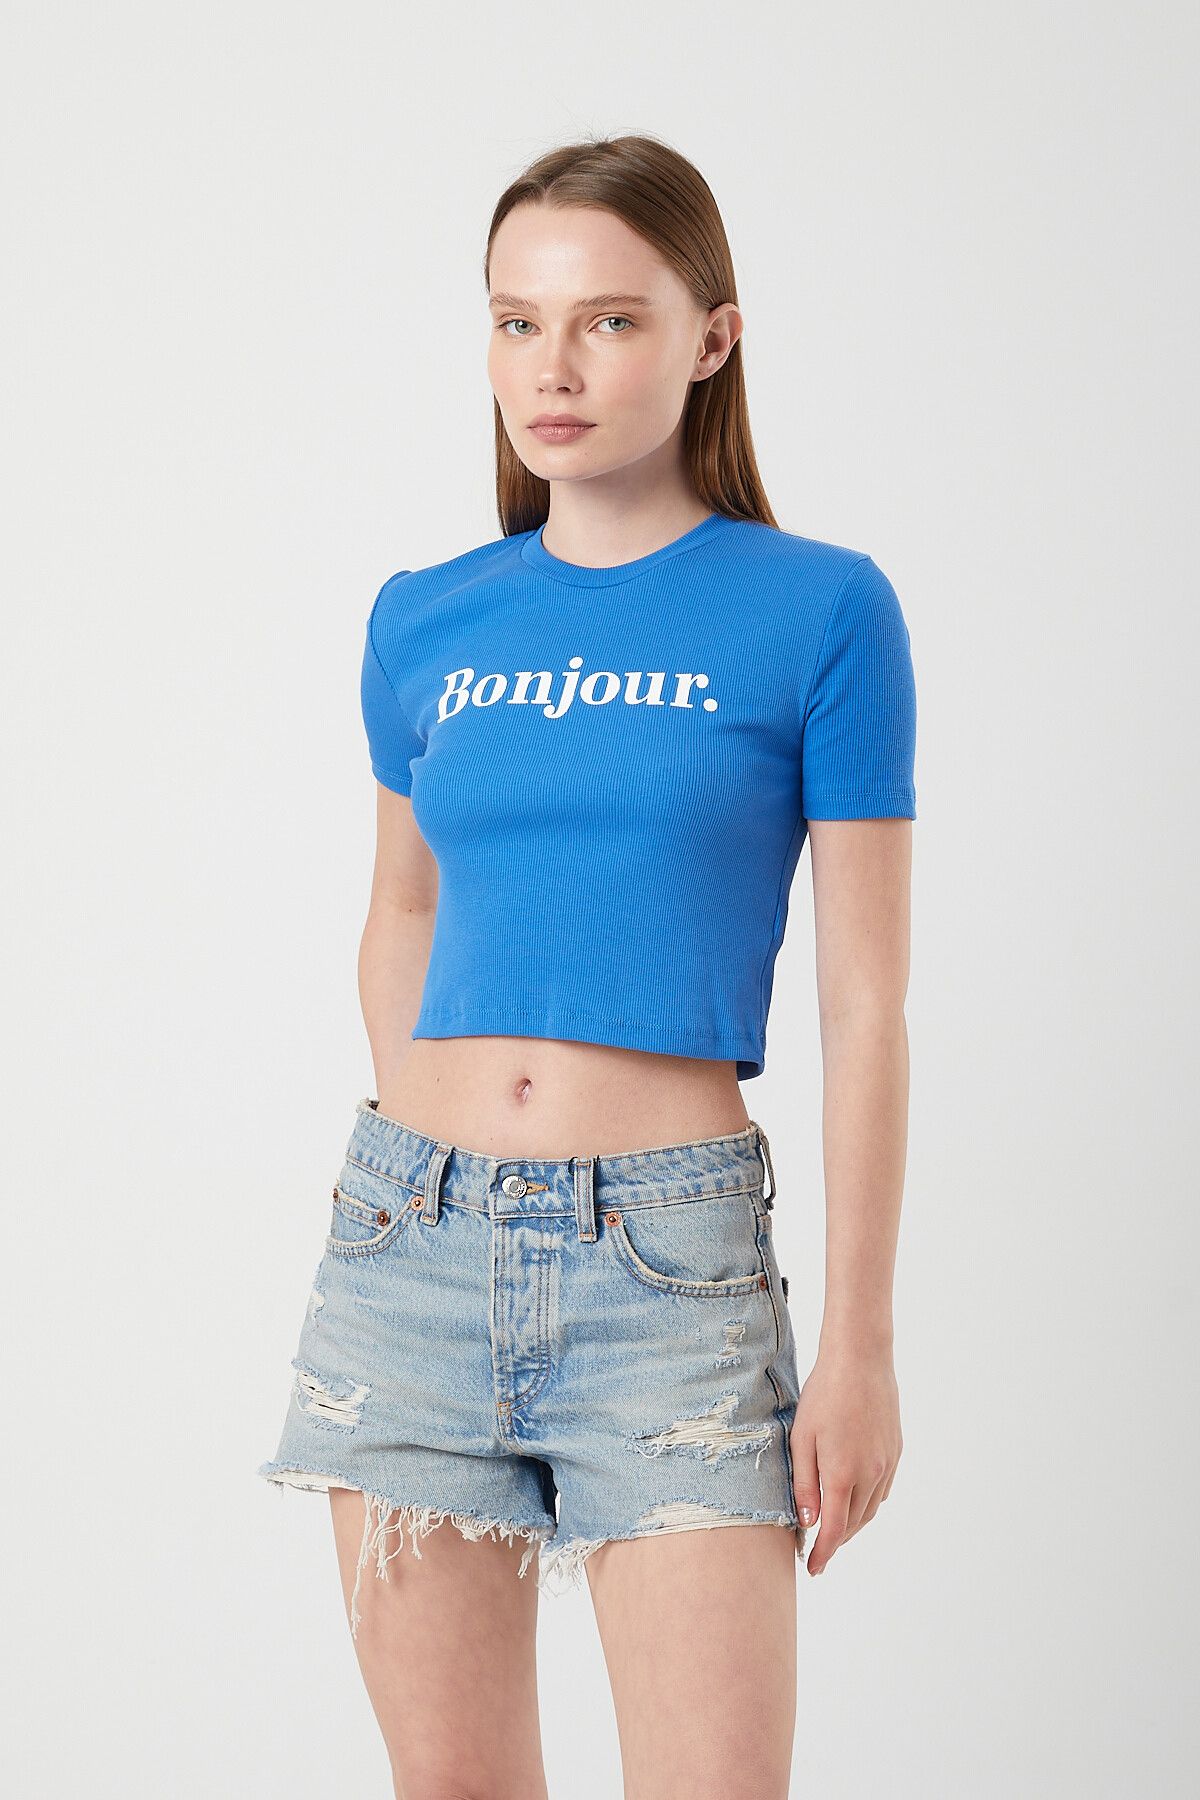 Mixray 1086 Kadın Bonjour Baskılı Pamuklu Crop T-Shirt